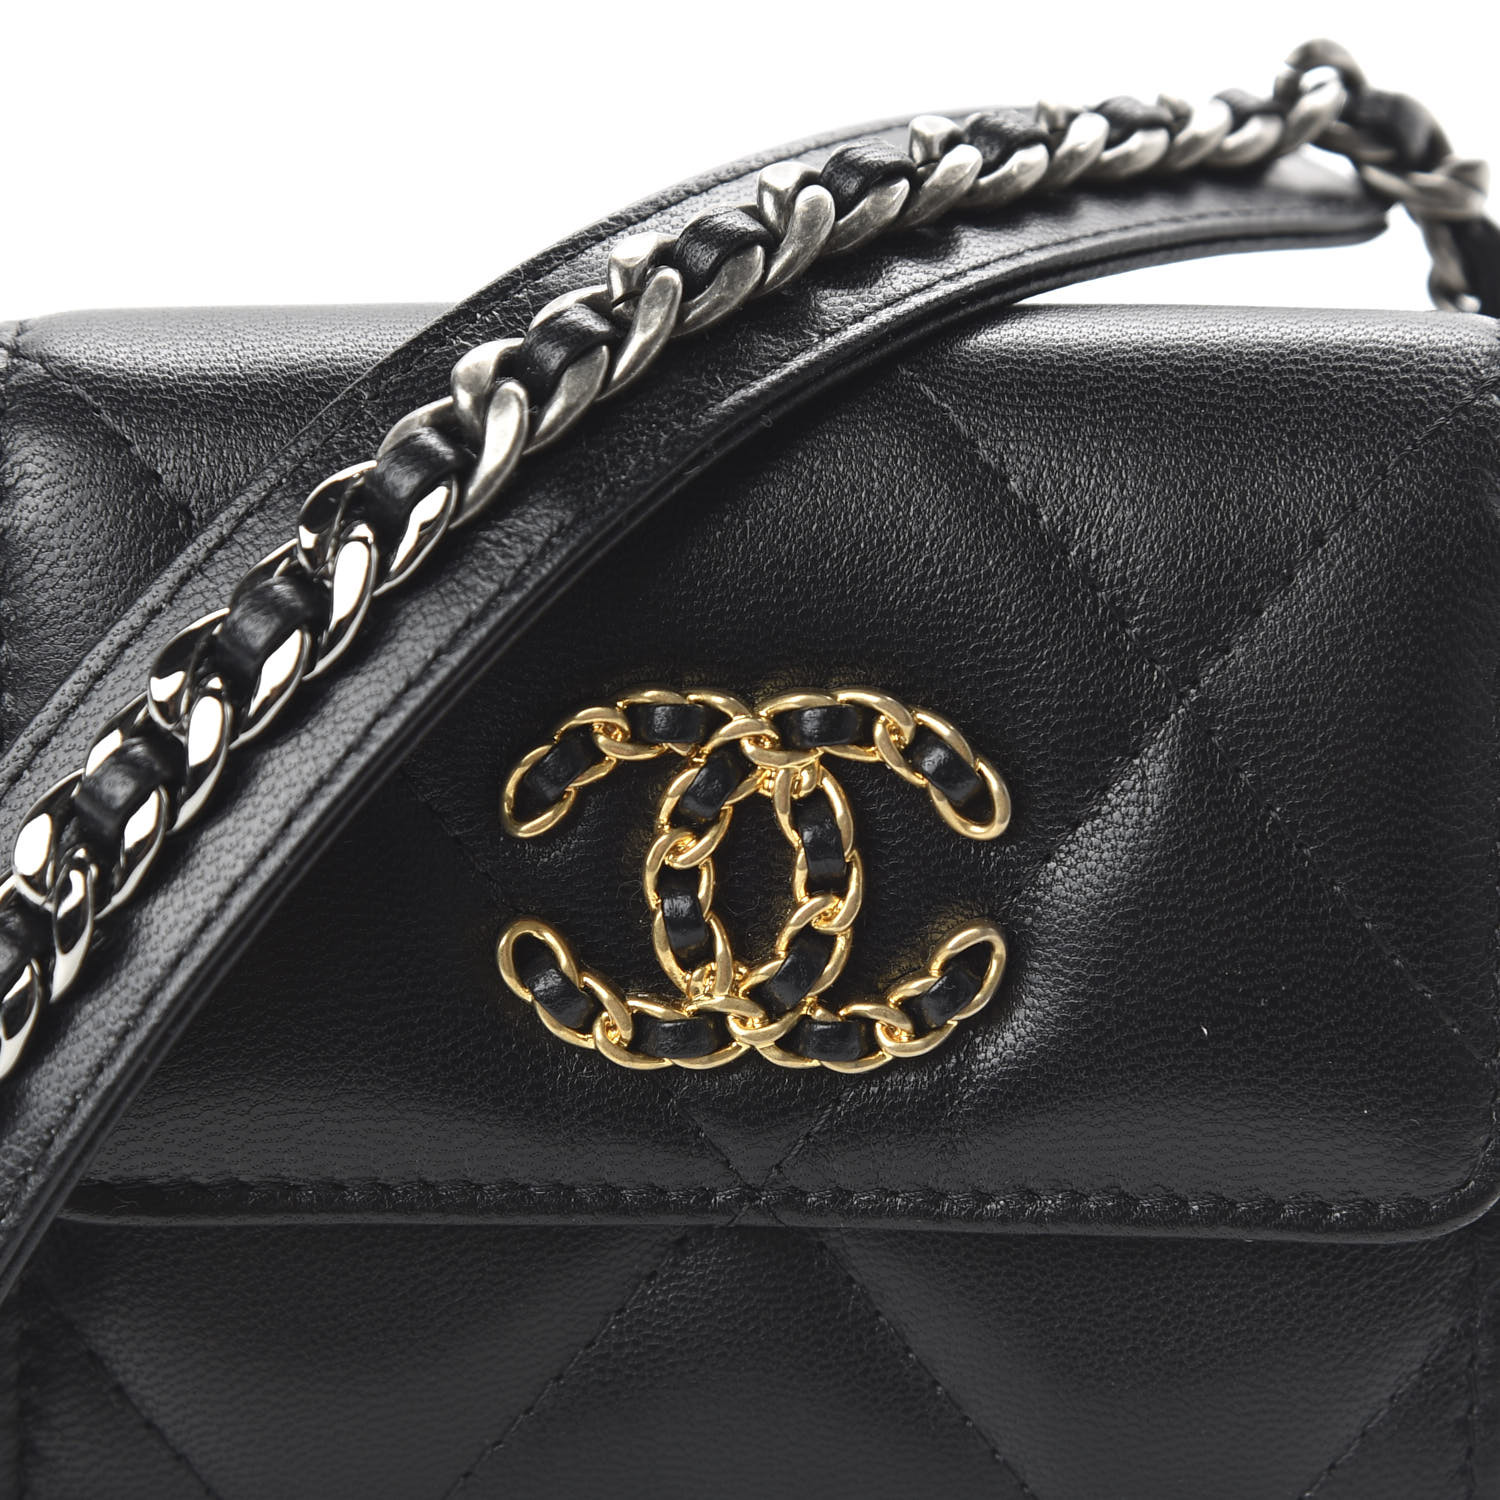 Chanel 19 leather handbag Chanel Black in Leather - 34980275